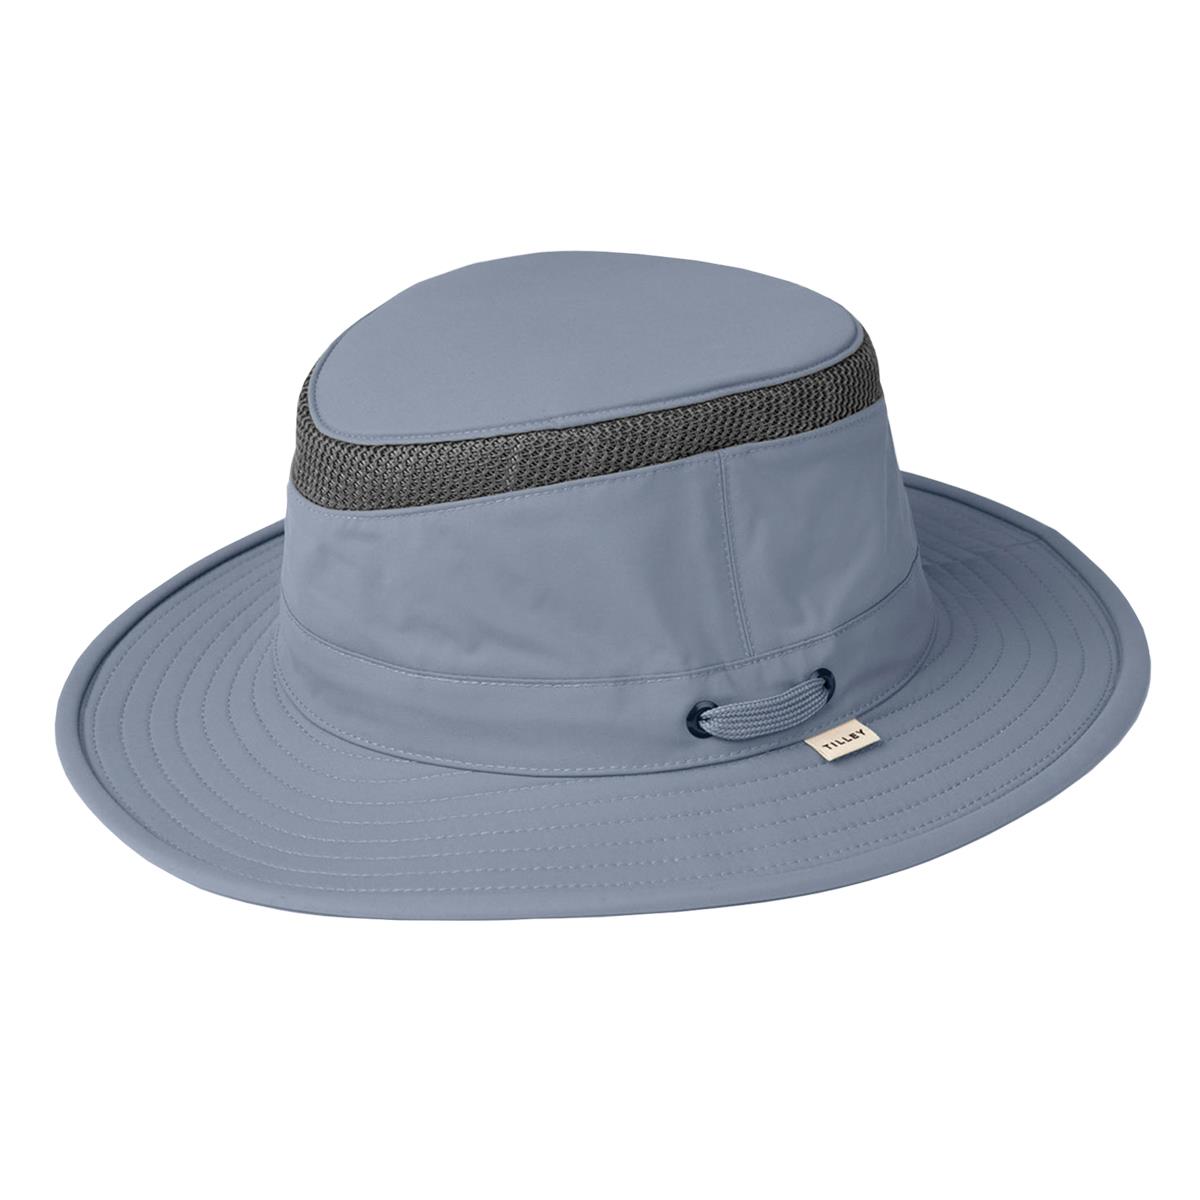 What is the hat design of Tilley LTM5 for proper fit?